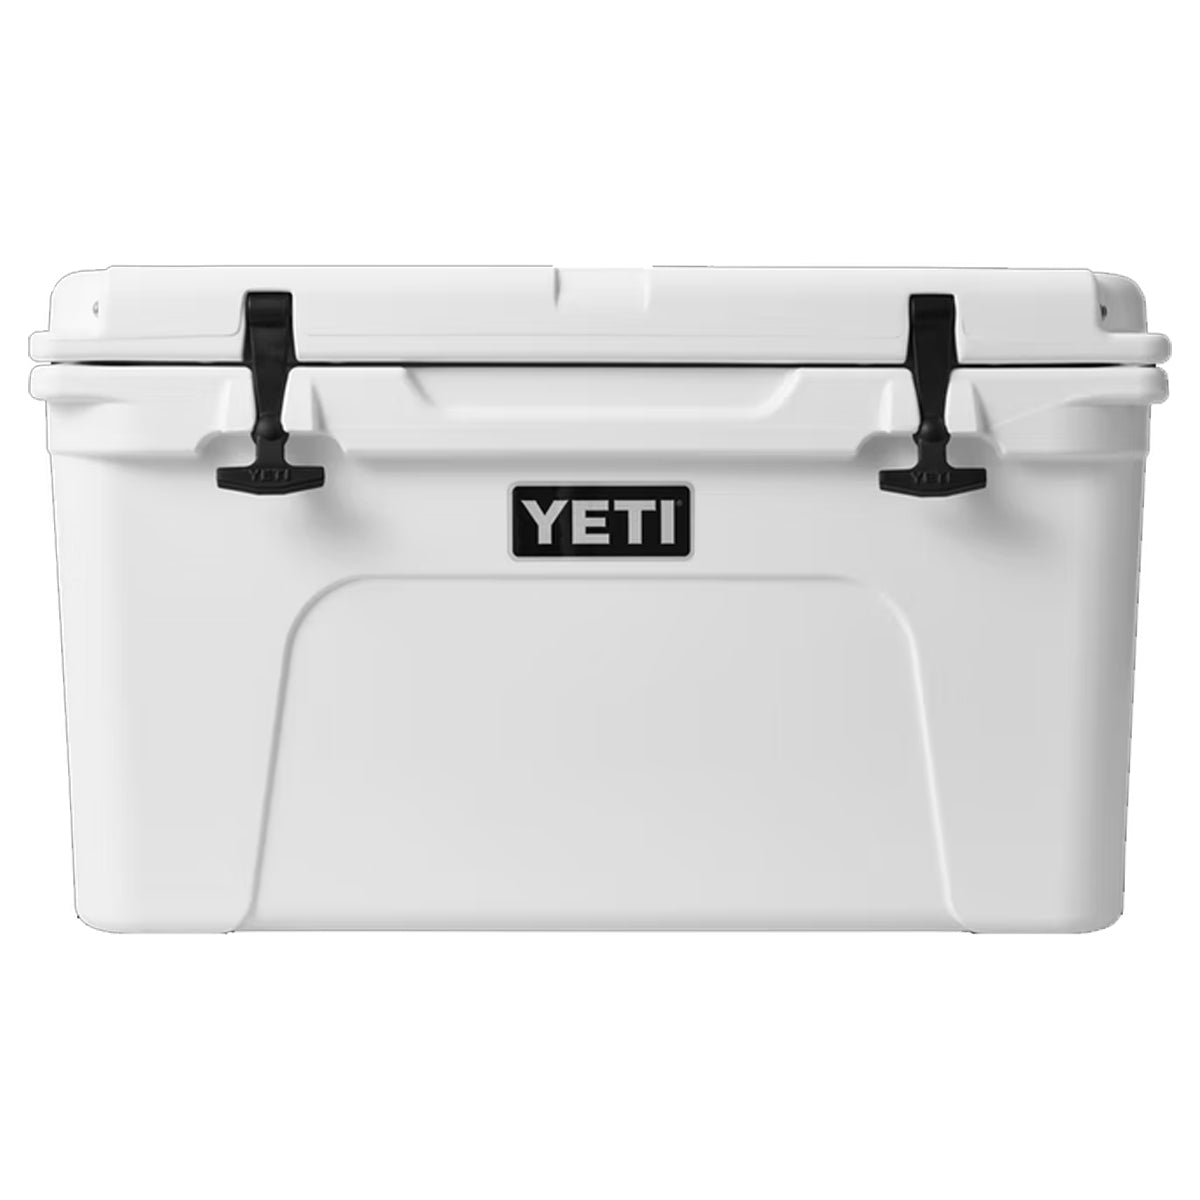 YETI Tundra 45 Cooler in  by GOHUNT | YETI - GOHUNT Shop